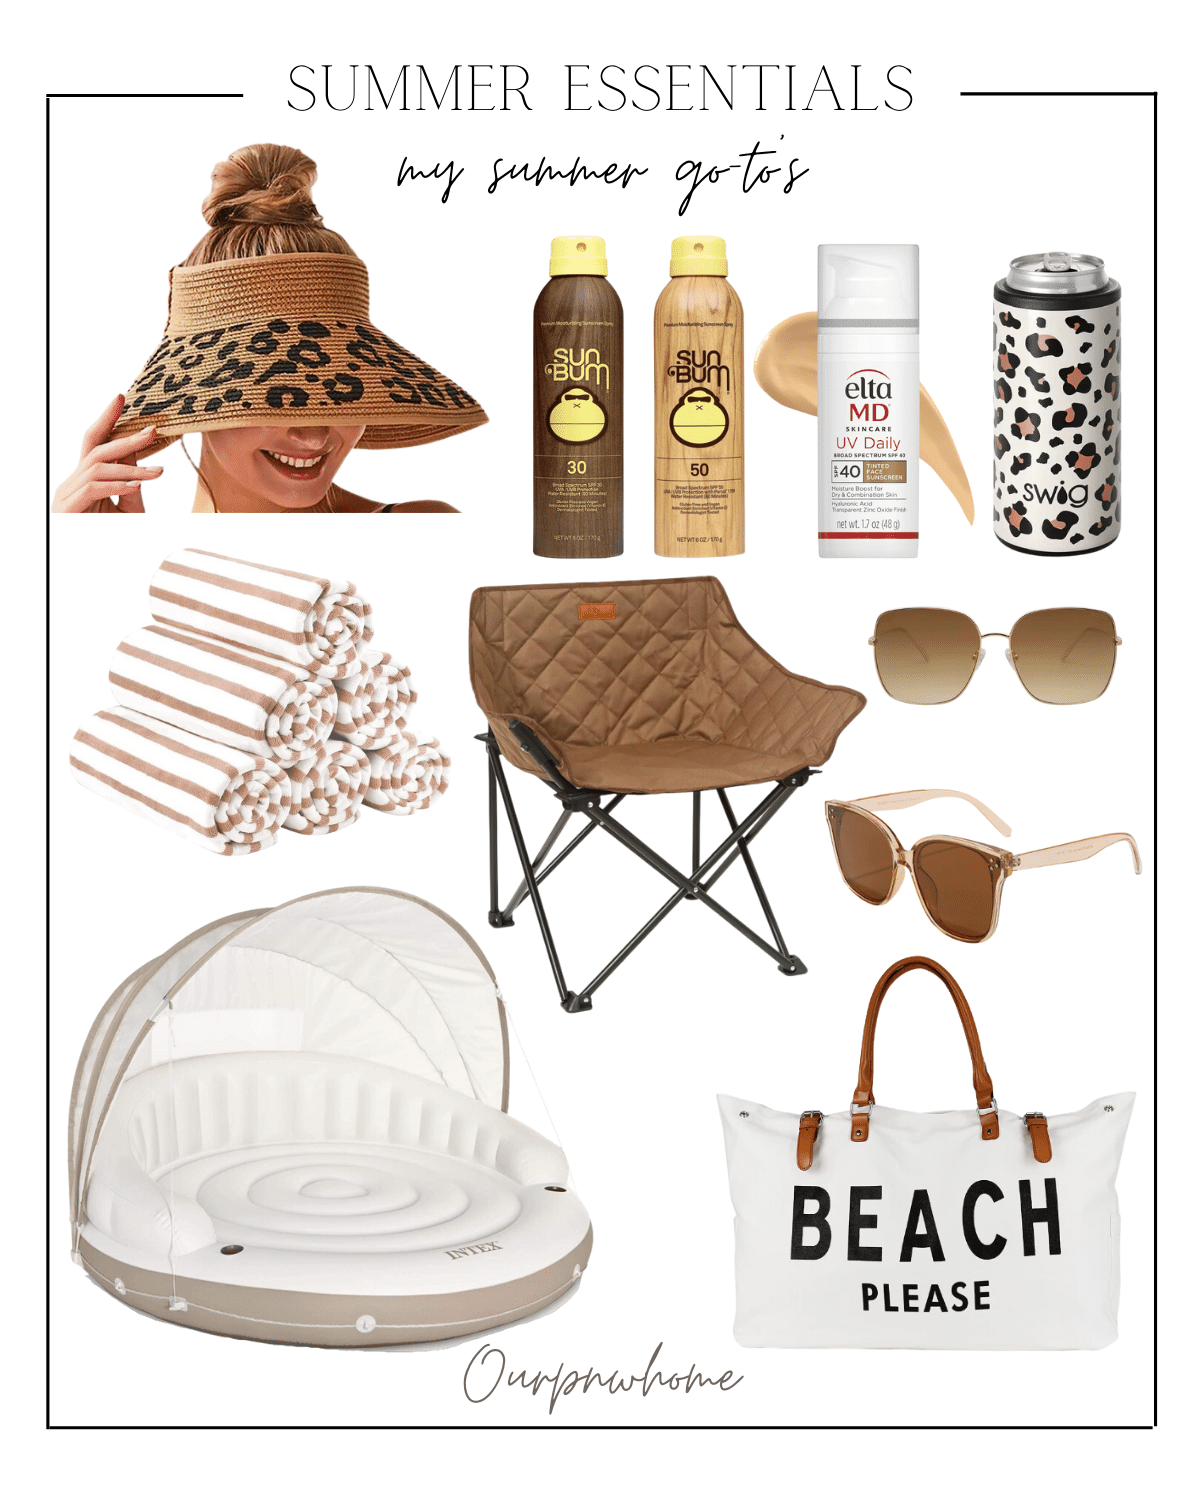 summer essentials, summer hat, visor, sunscreen, drink coozie, beach towels, lawn chair, gold sunglasses, pool floaty, beach bag 